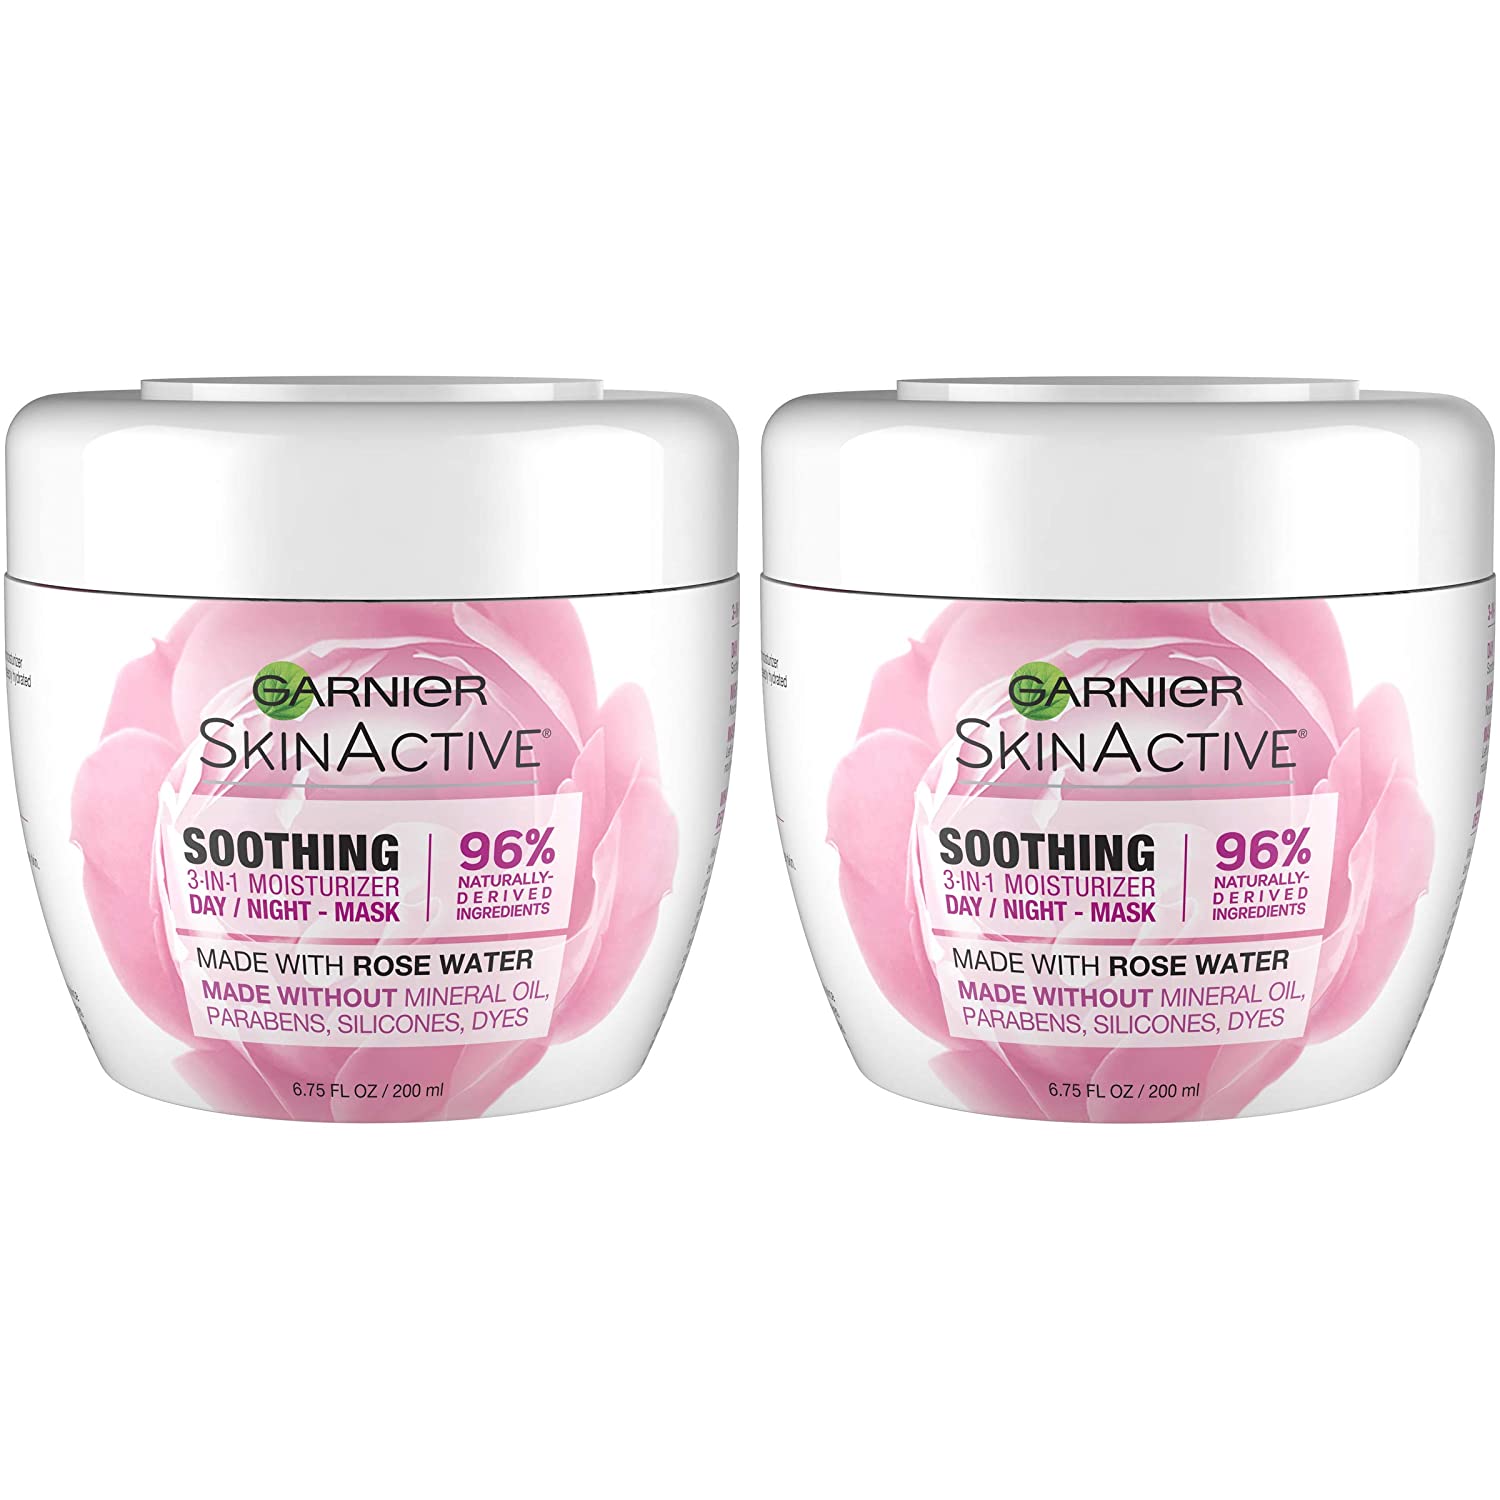 Garnier SkinActive 3-in-1 Face Moisturizer with Rose Water $10.78 (REG $19.98)